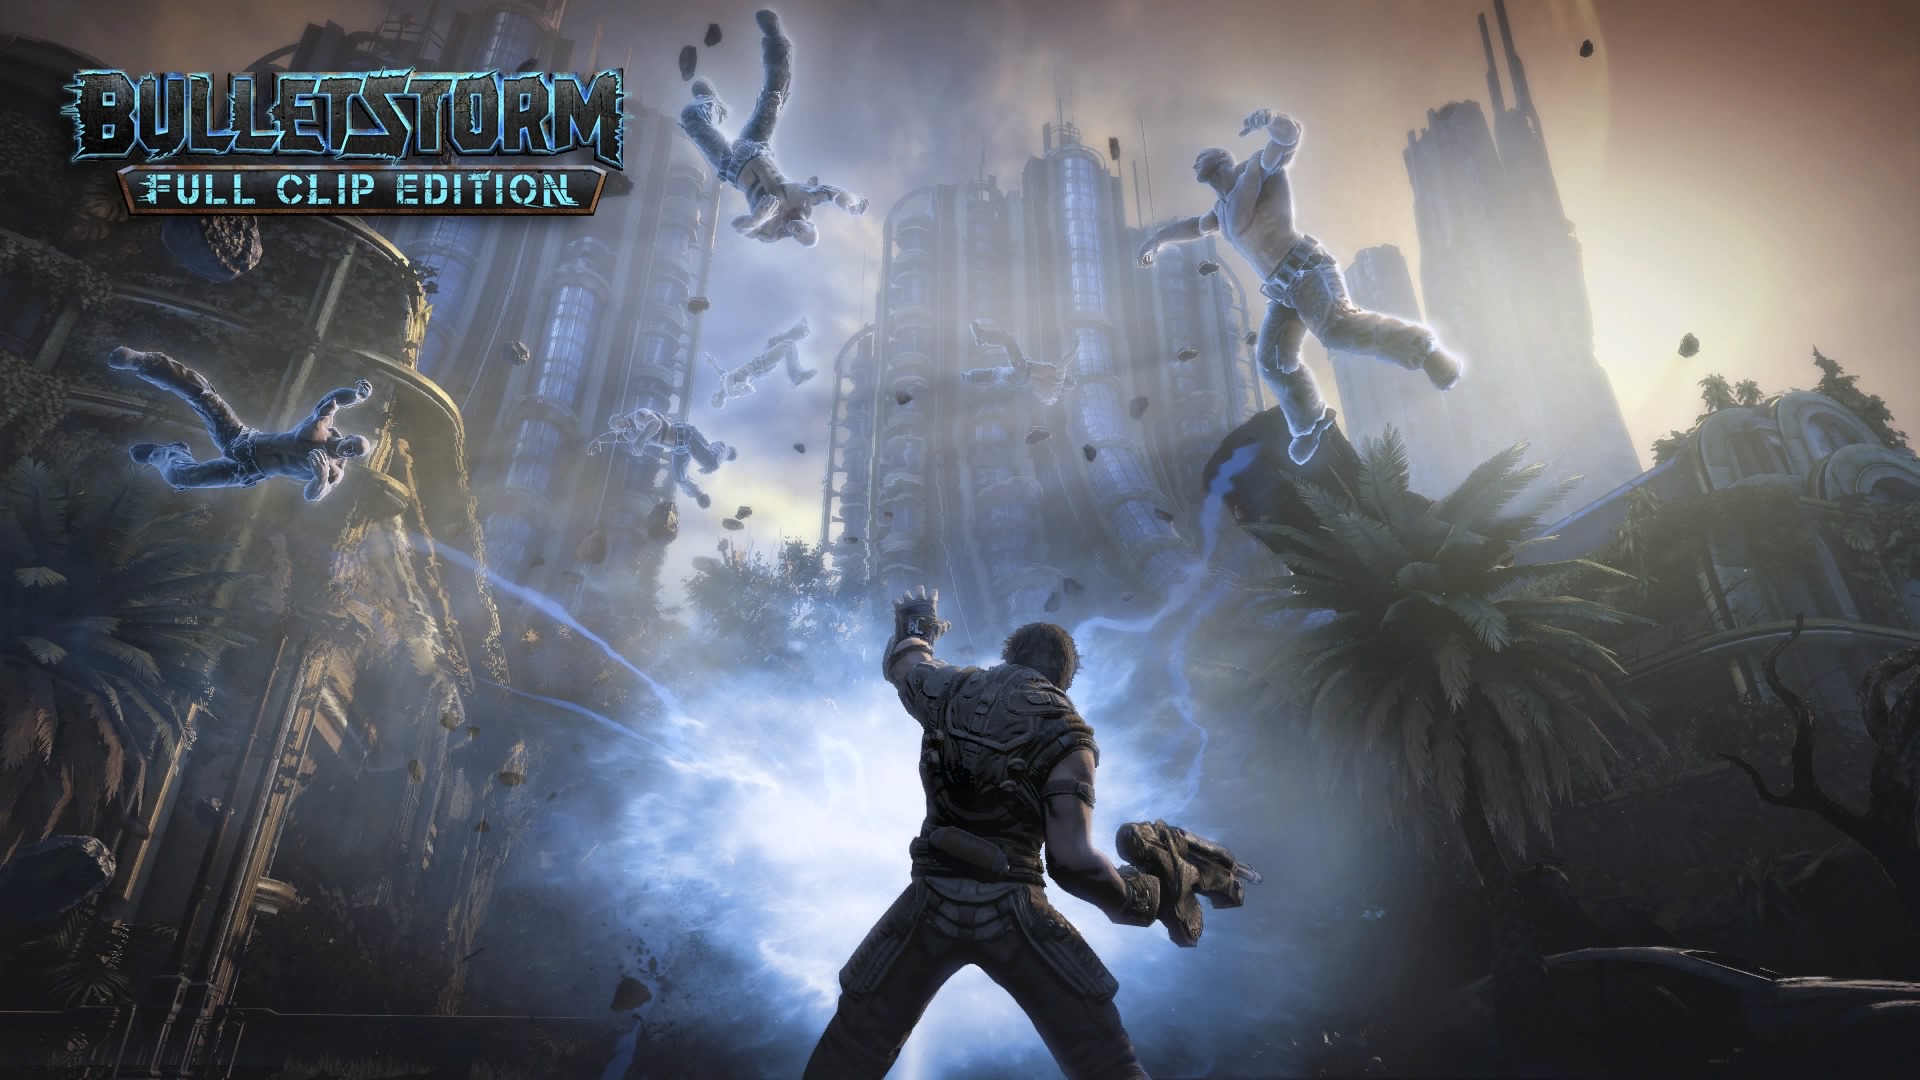 Review: Shadow Warrior 3: Definitive Edition – Destructoid